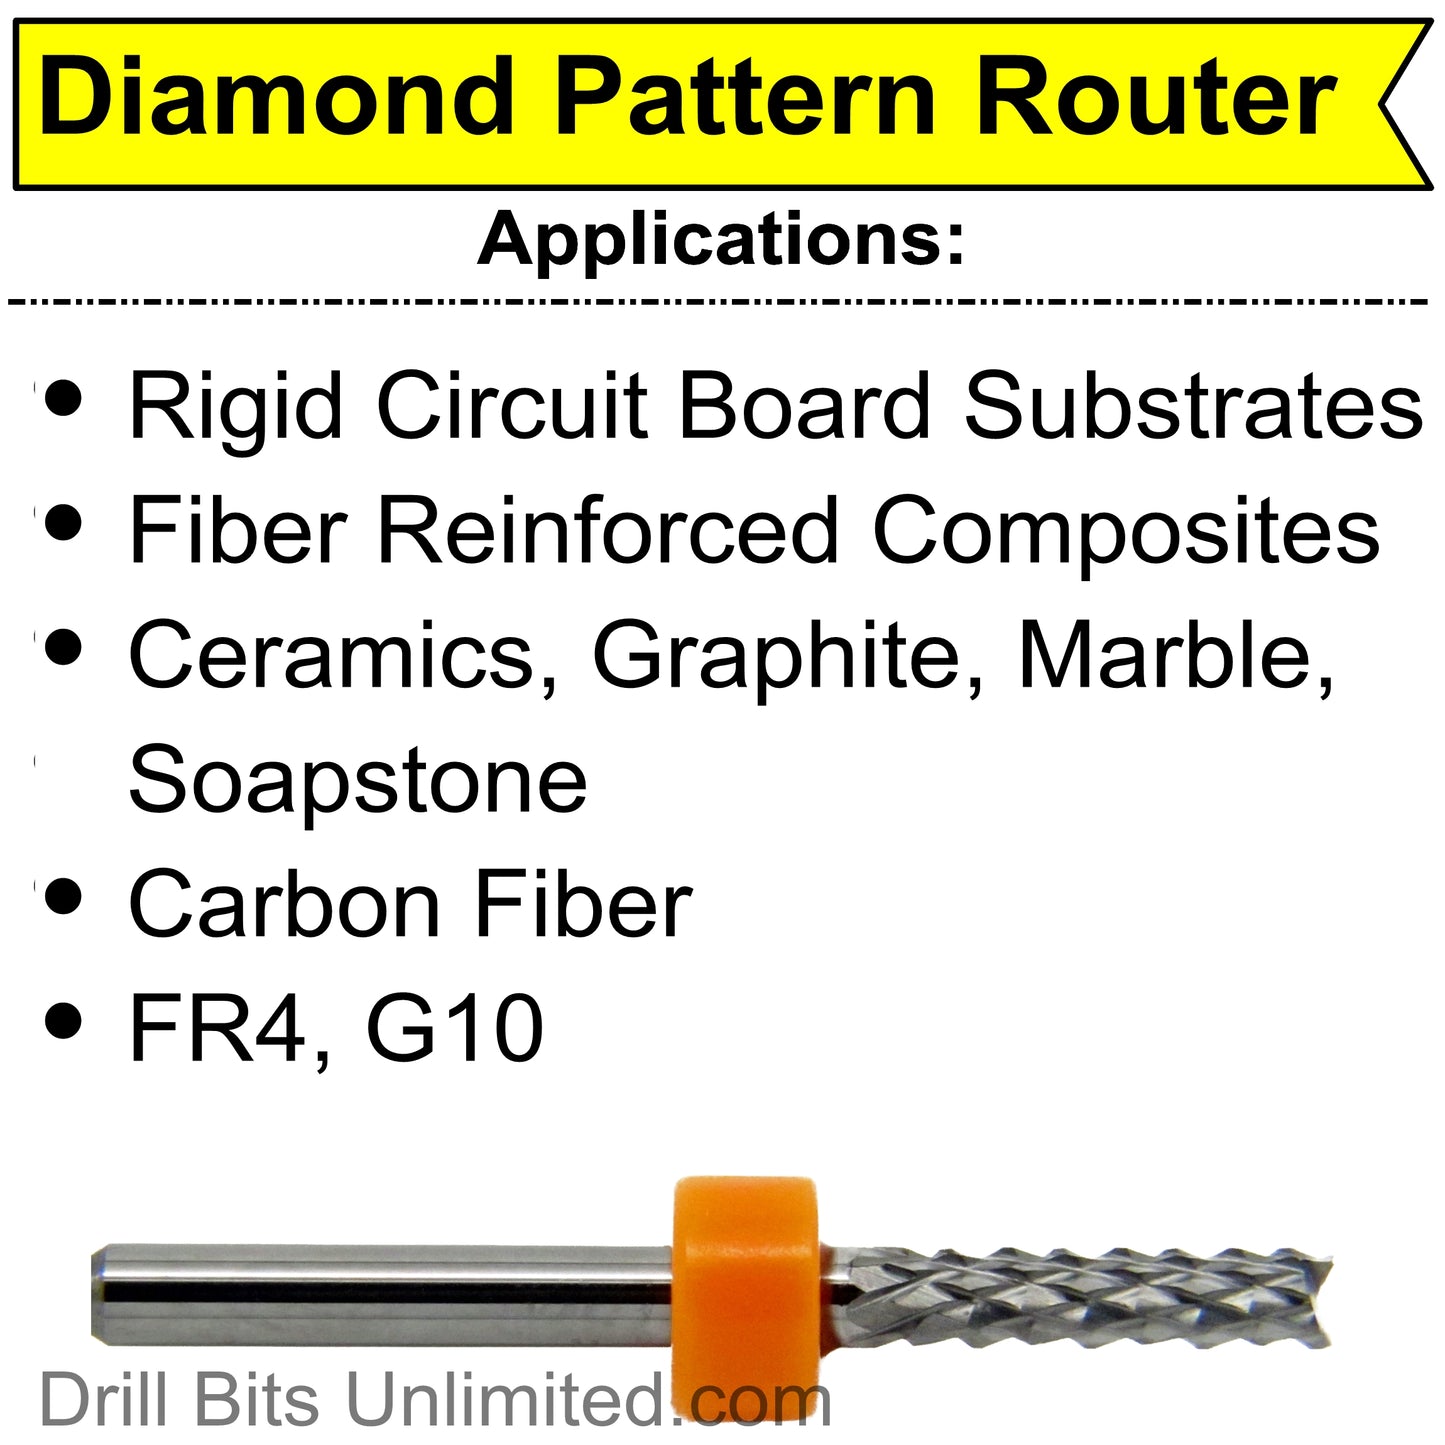 1/8" x .472" LOC Diamond Pattern Carbide Router Bit - Fishtail Tip R145